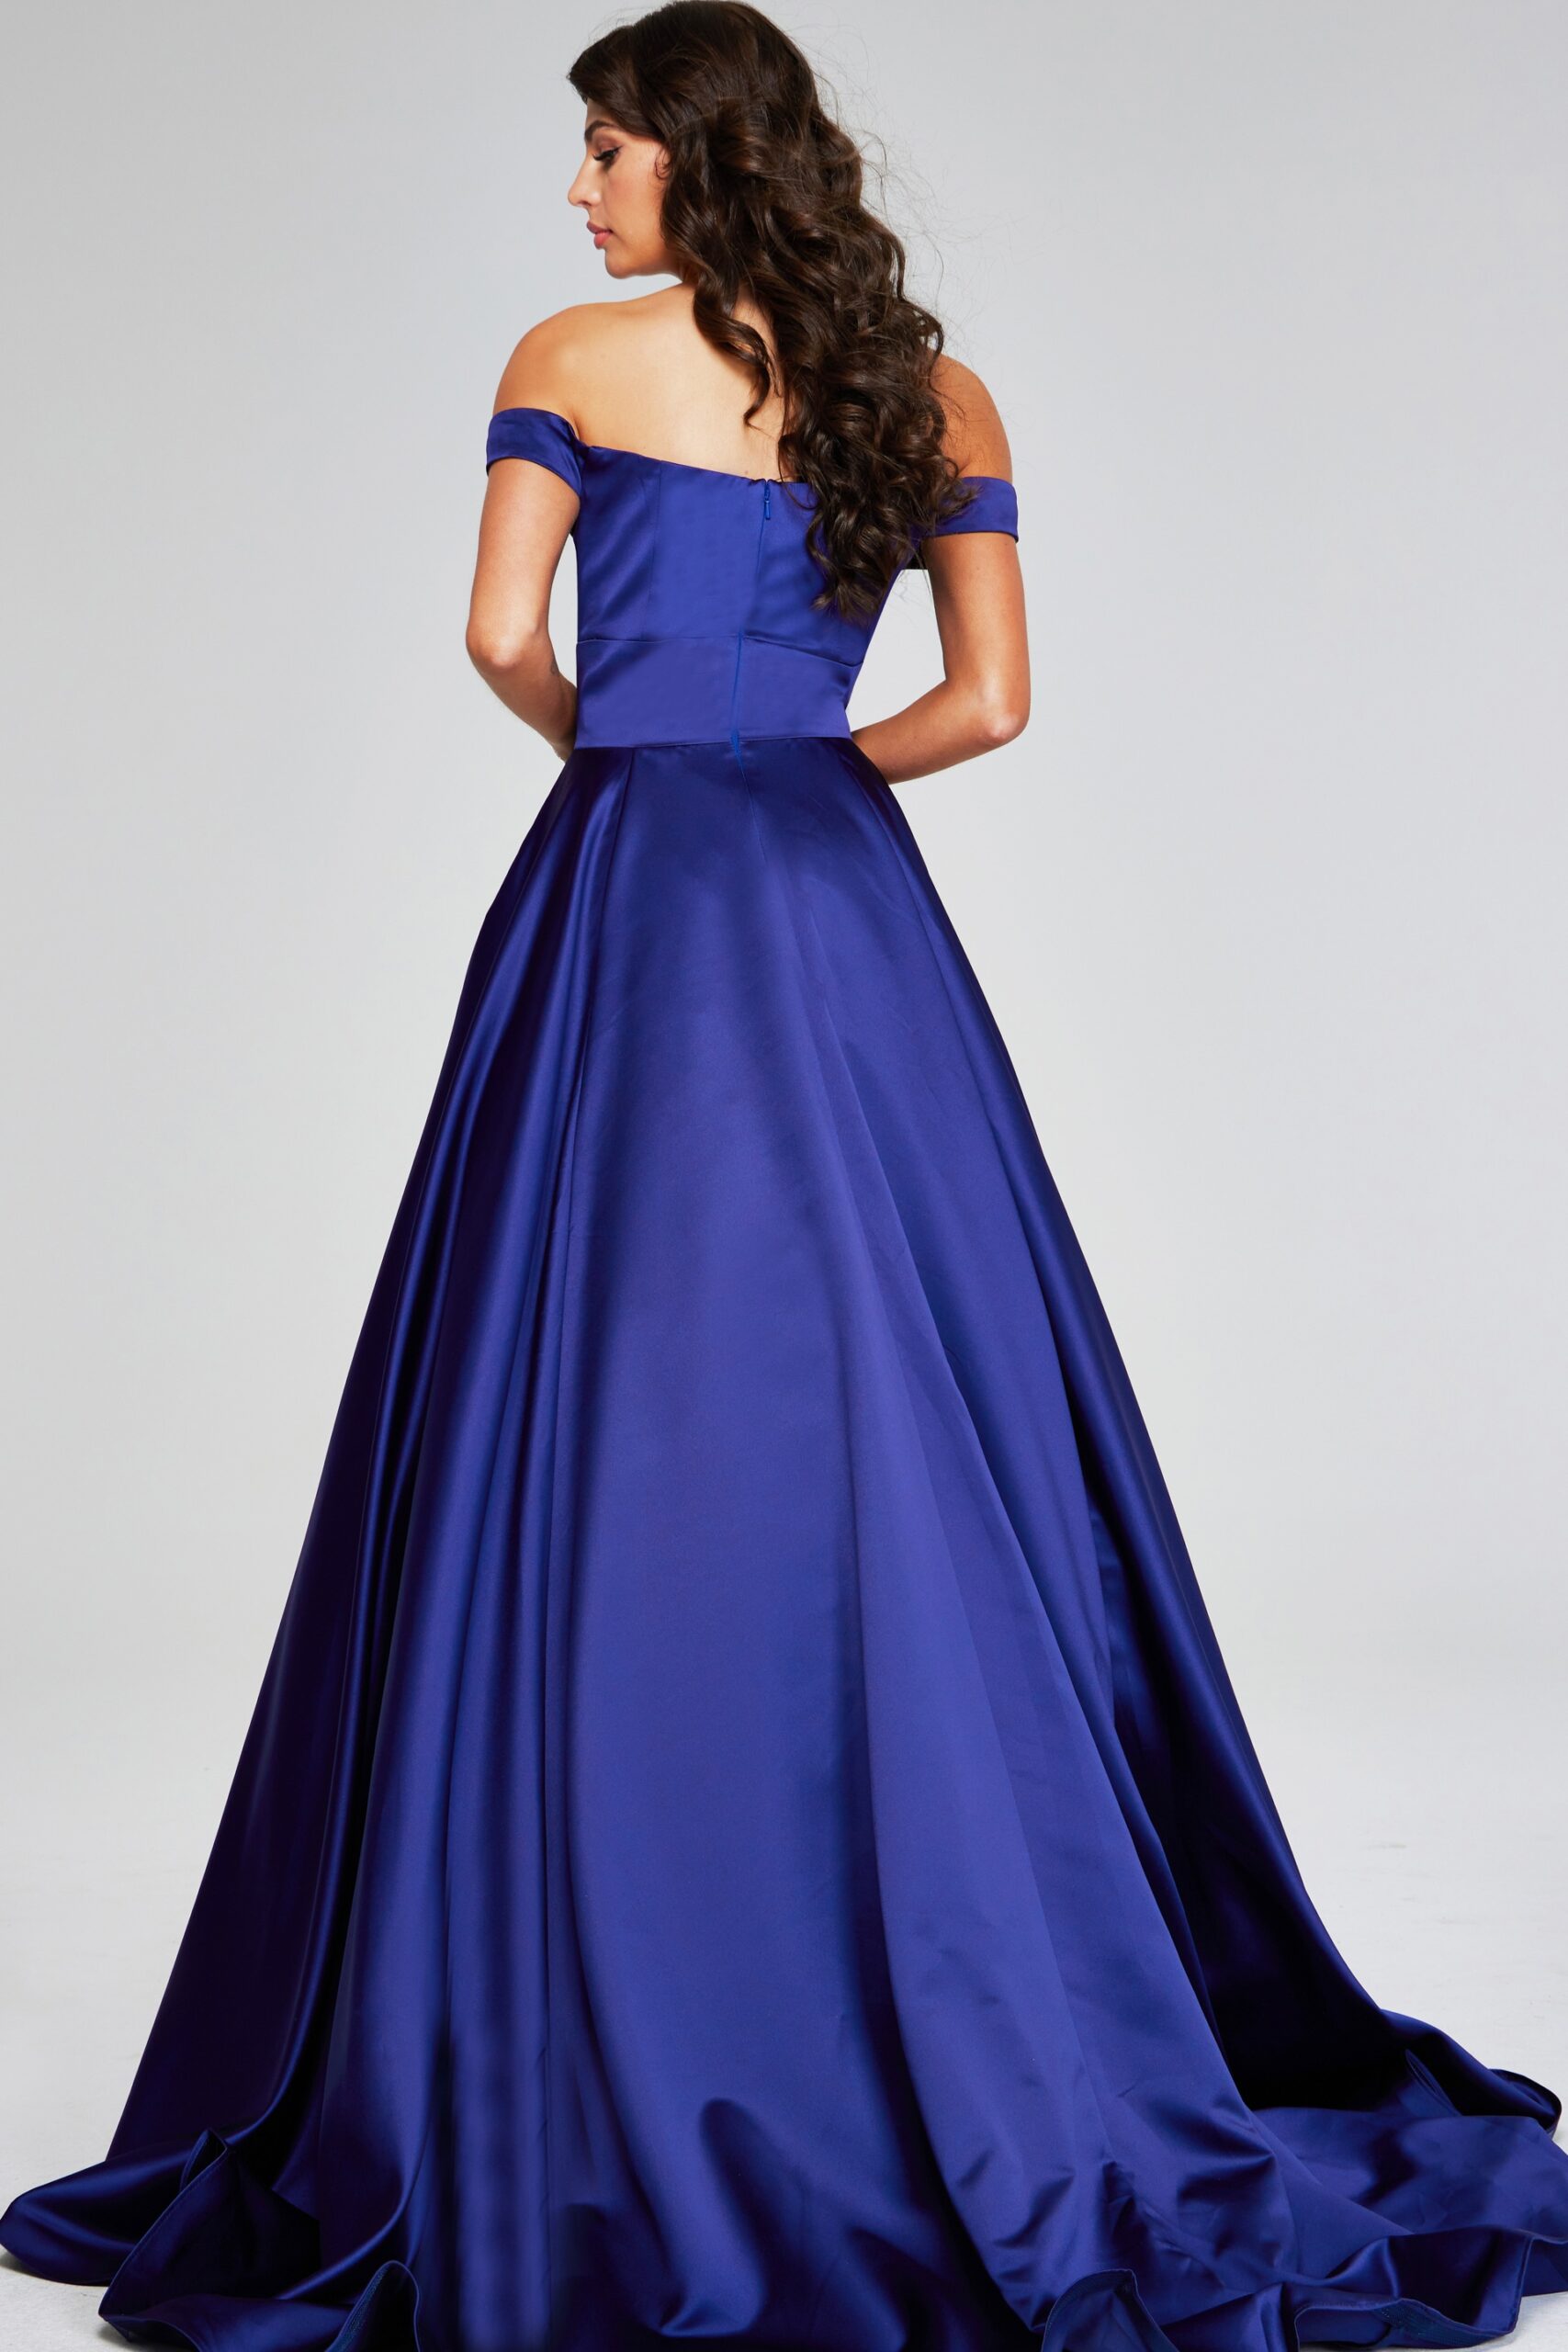 Stunning Dark Purple Off-Shoulder Gown with Cutout Detail 40787